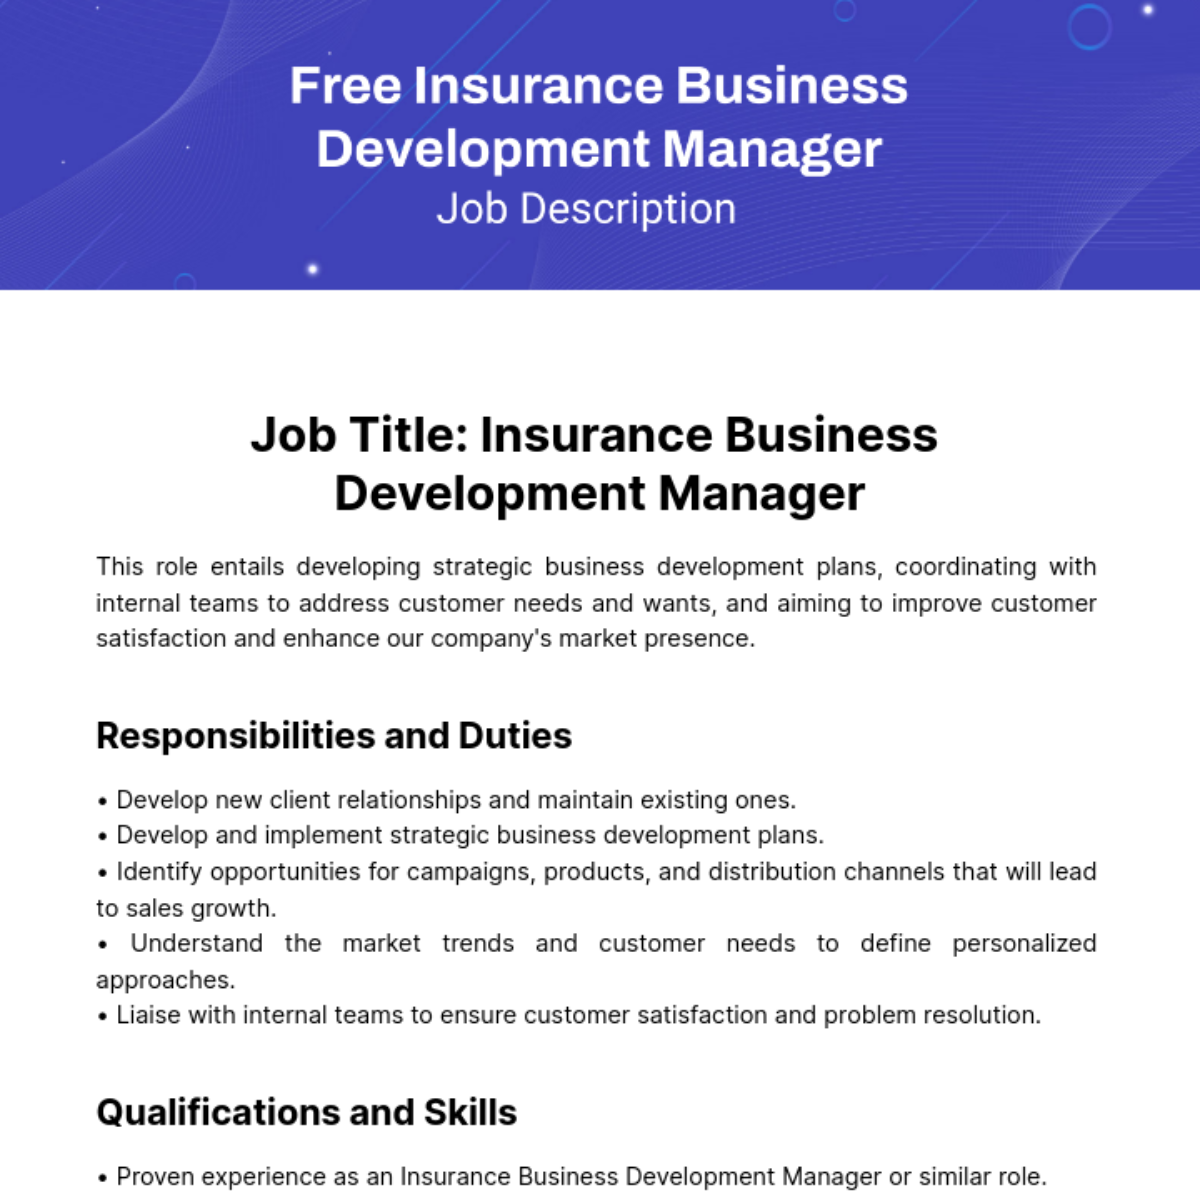 Free Insurance Business Development Manager Job Description Template